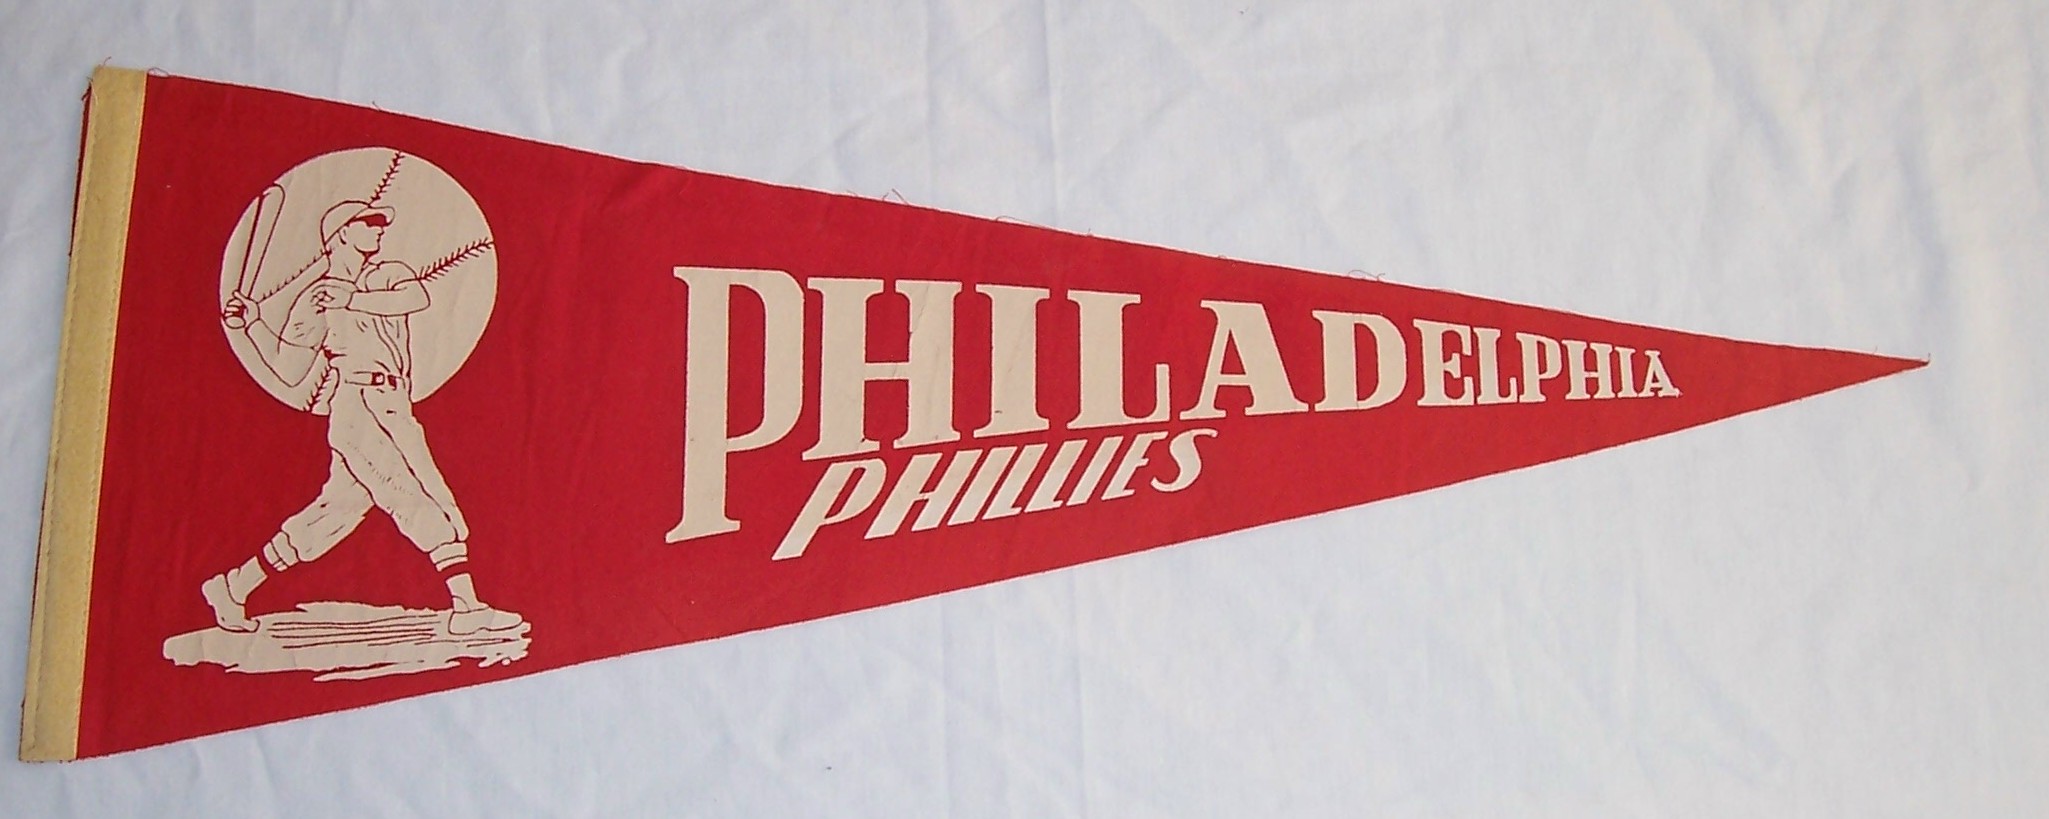 2008 Phillies World Series Pennant, Philadelphia Phillies Items - CRW  Flags Store in Glen Burnie, Marylan…